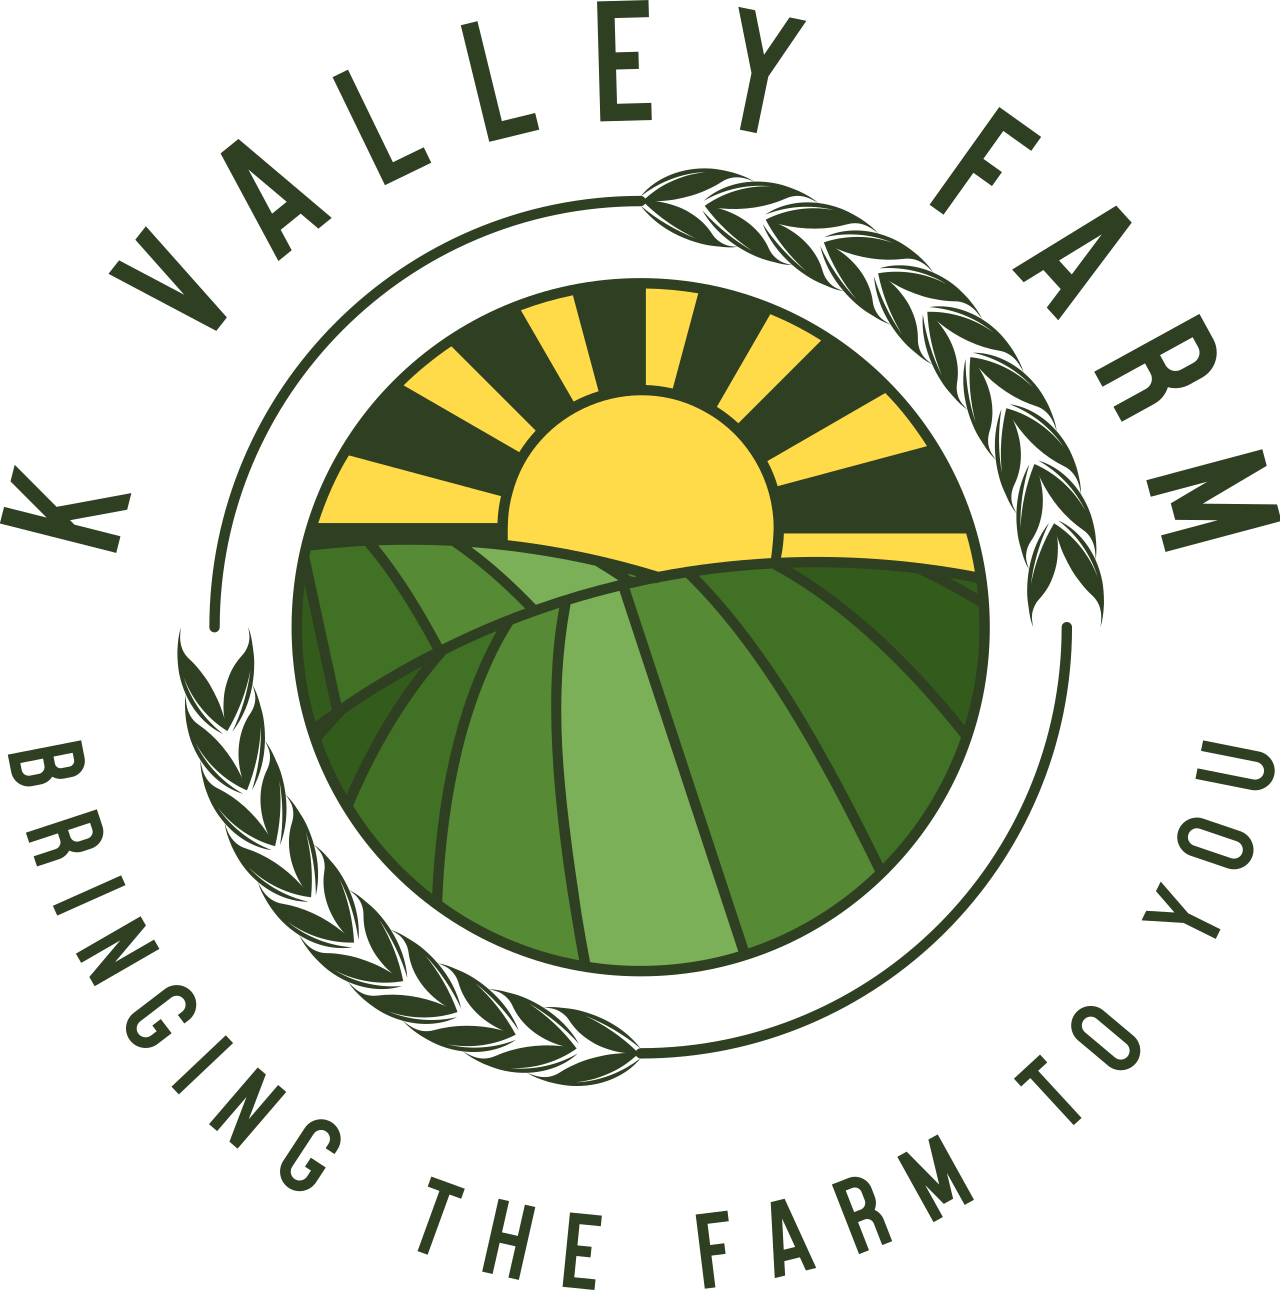 K Valley Farm's web page